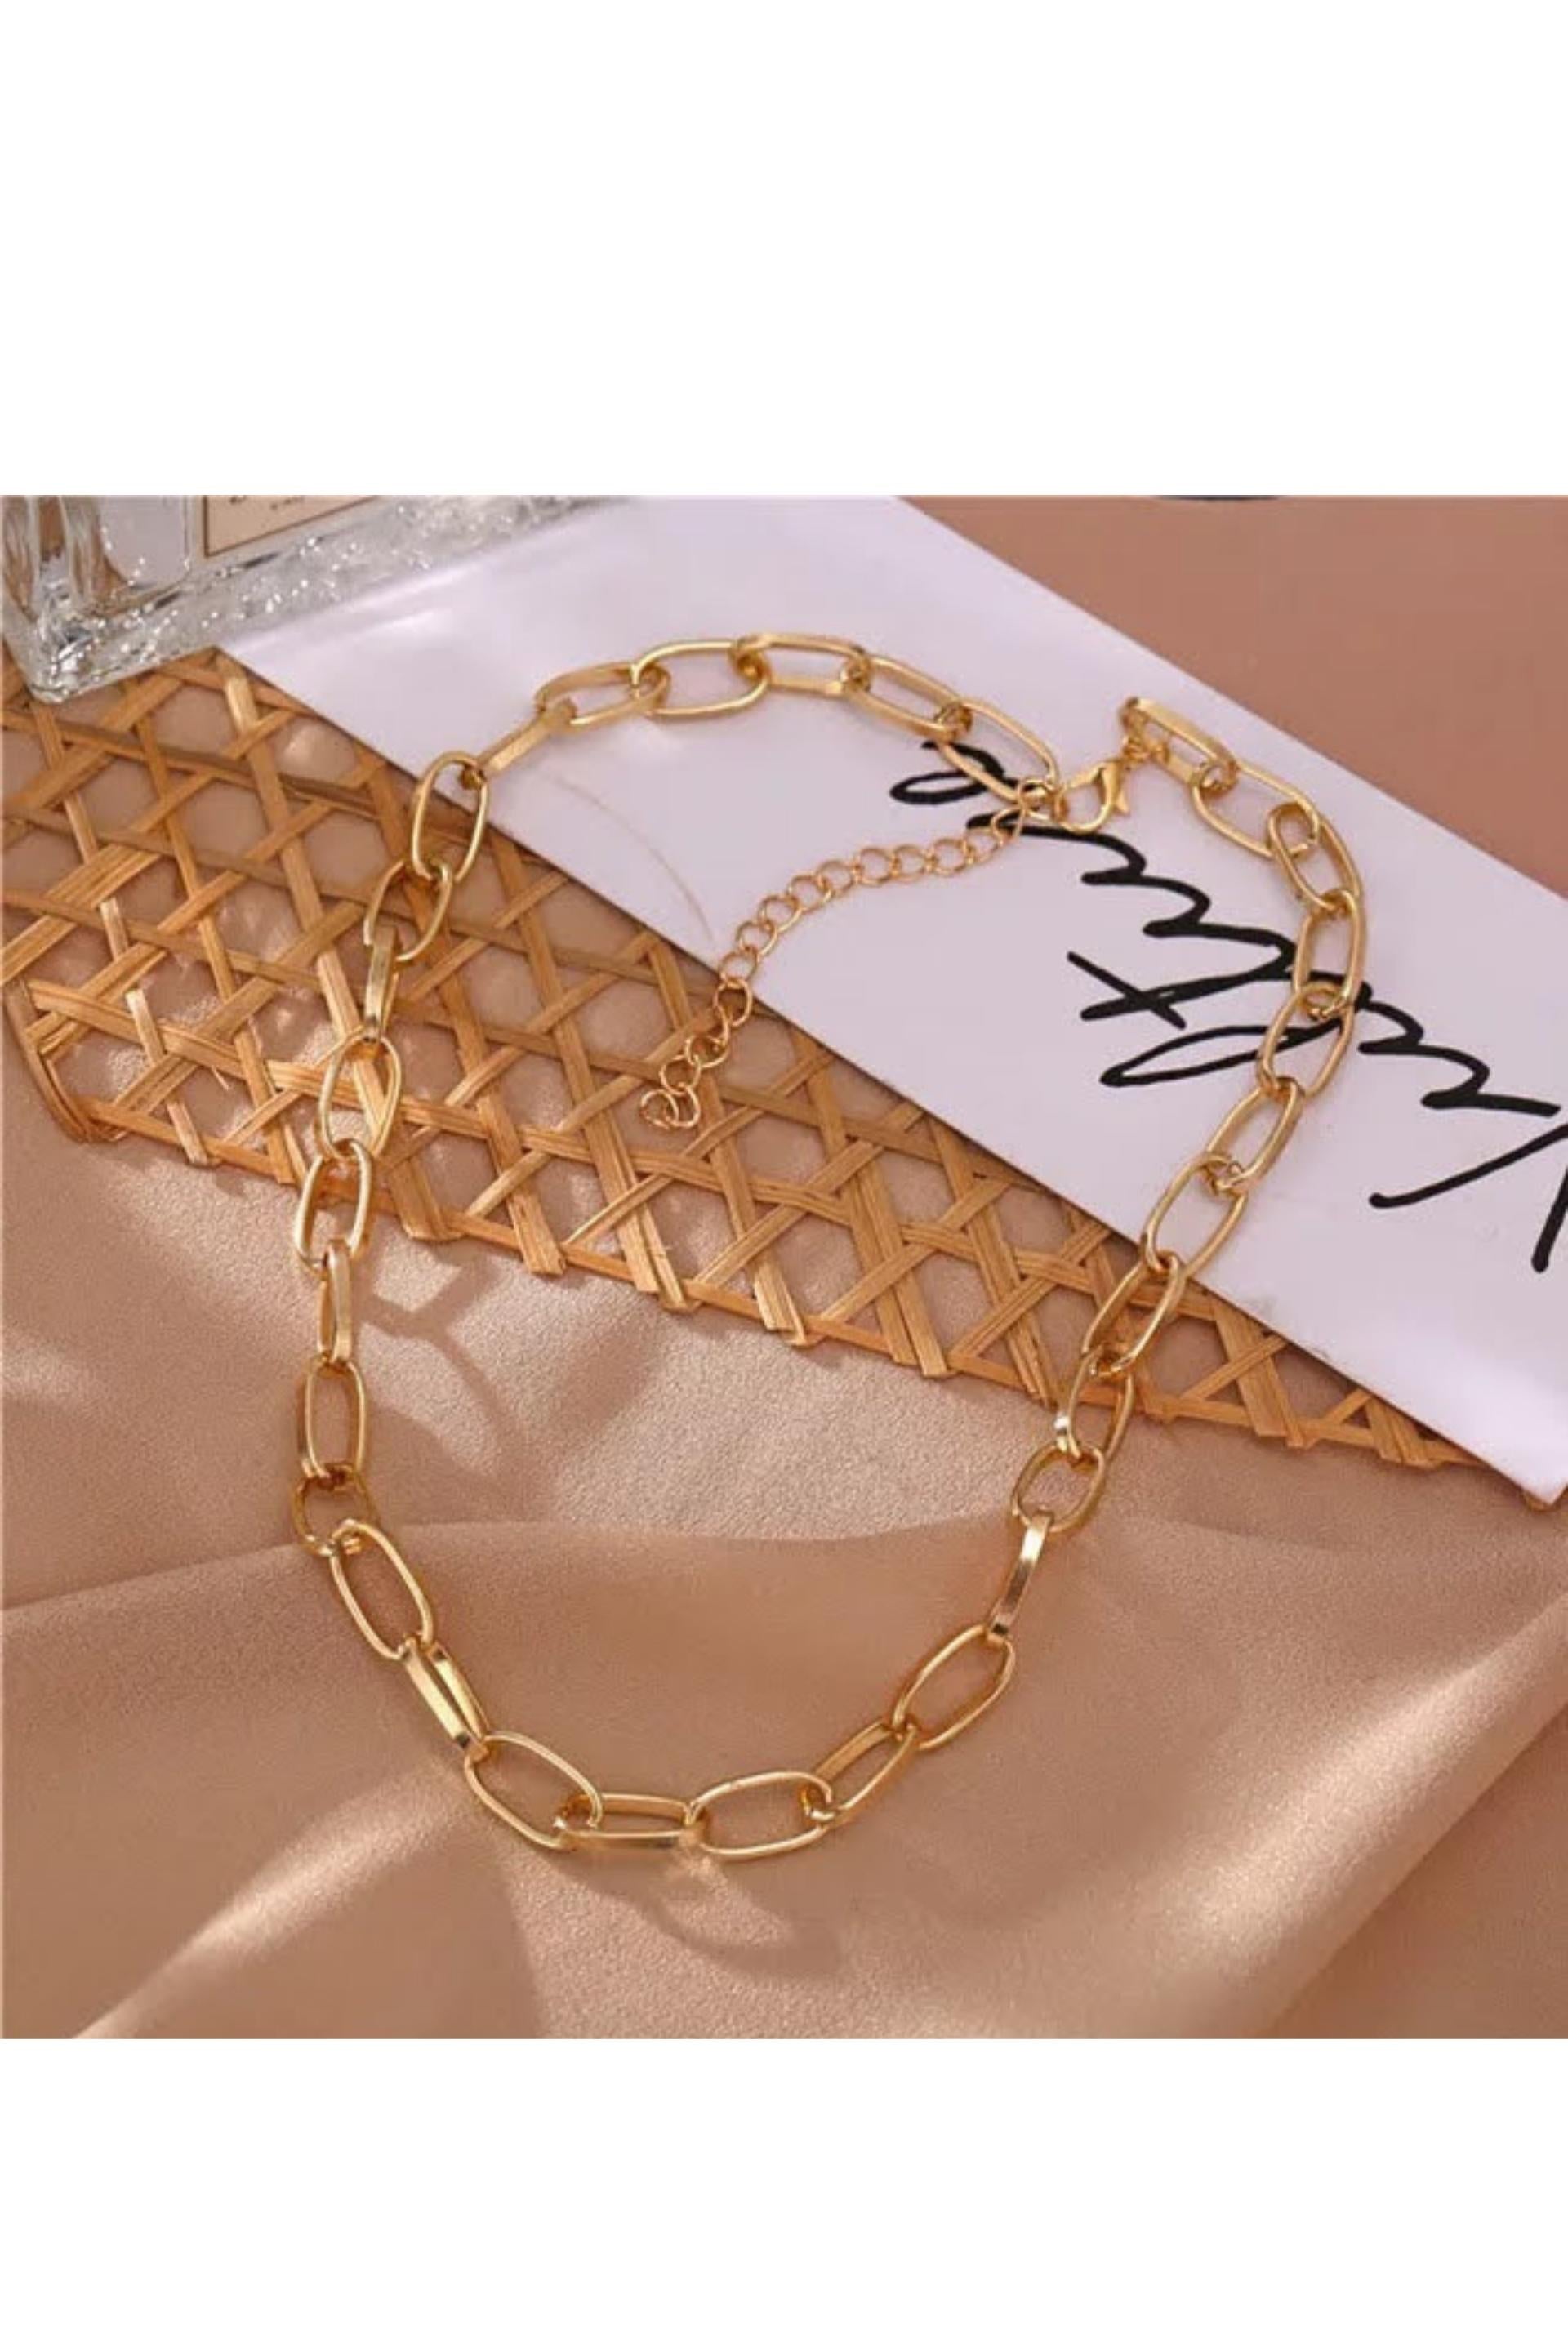 Firangi Yarn Golden Neck Chain Jewelery For Men